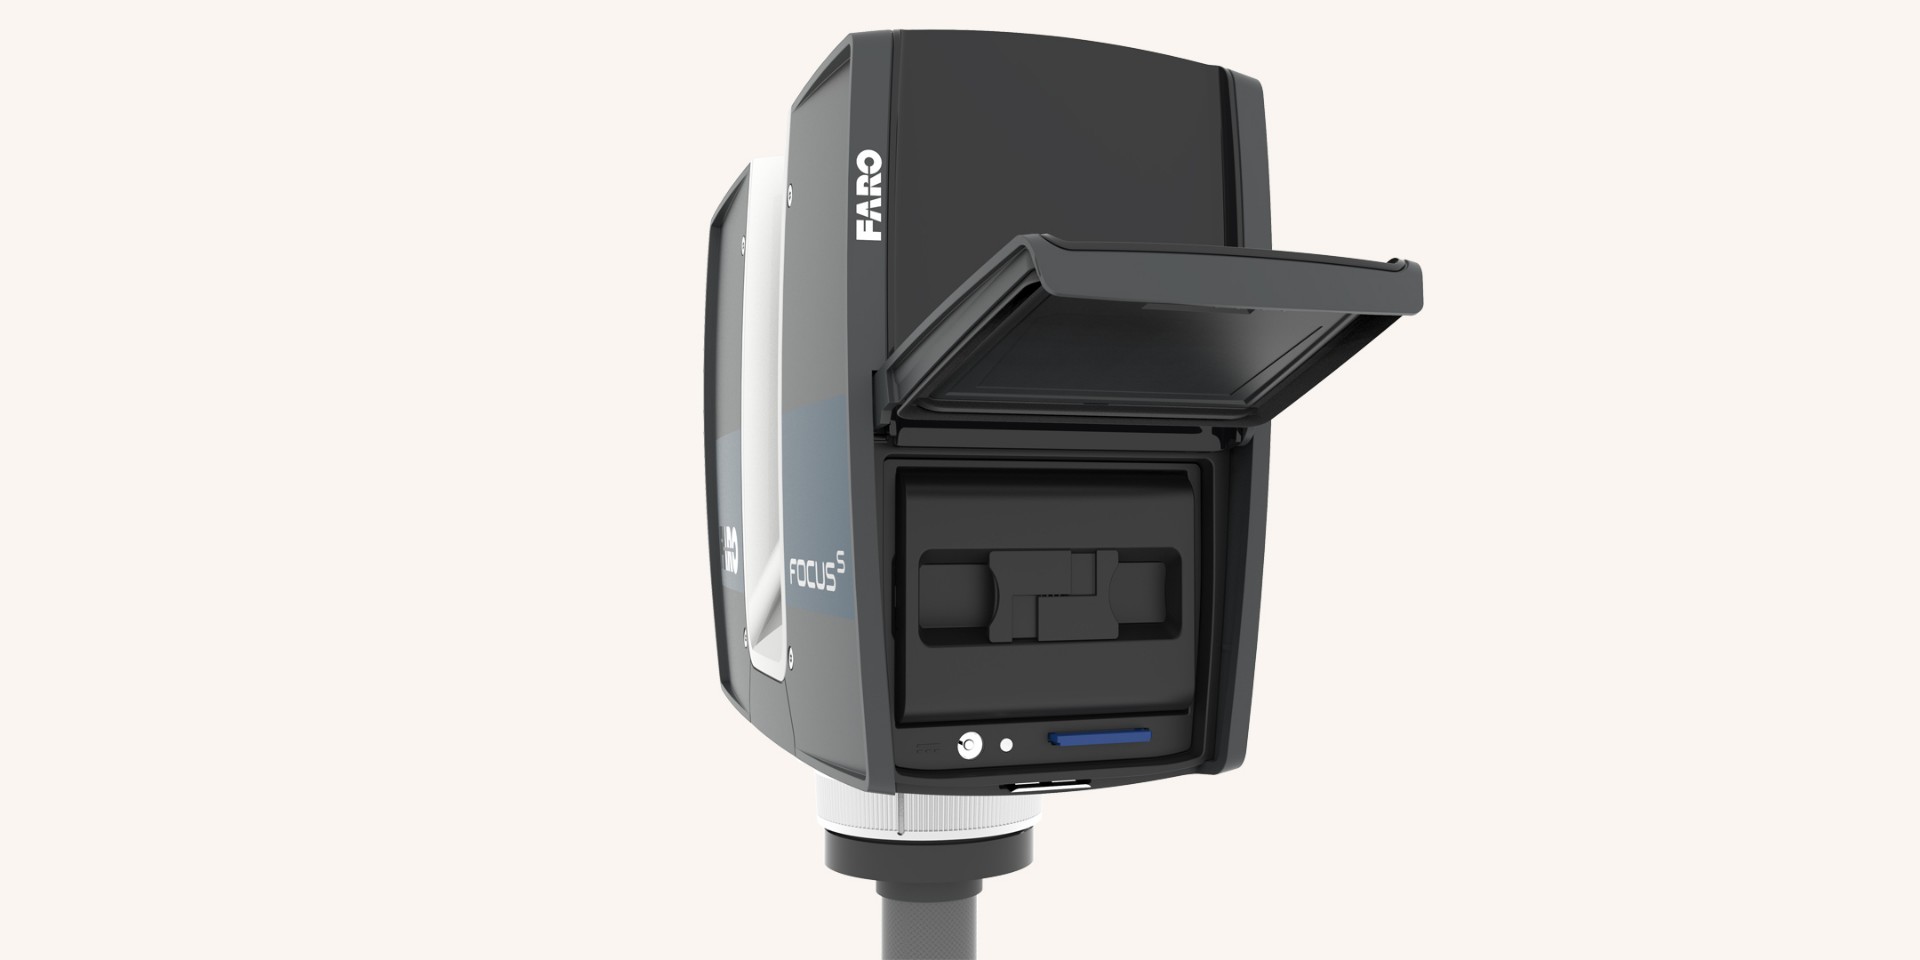 Фото 3D сканер FARO Laser Scanner Focus S70